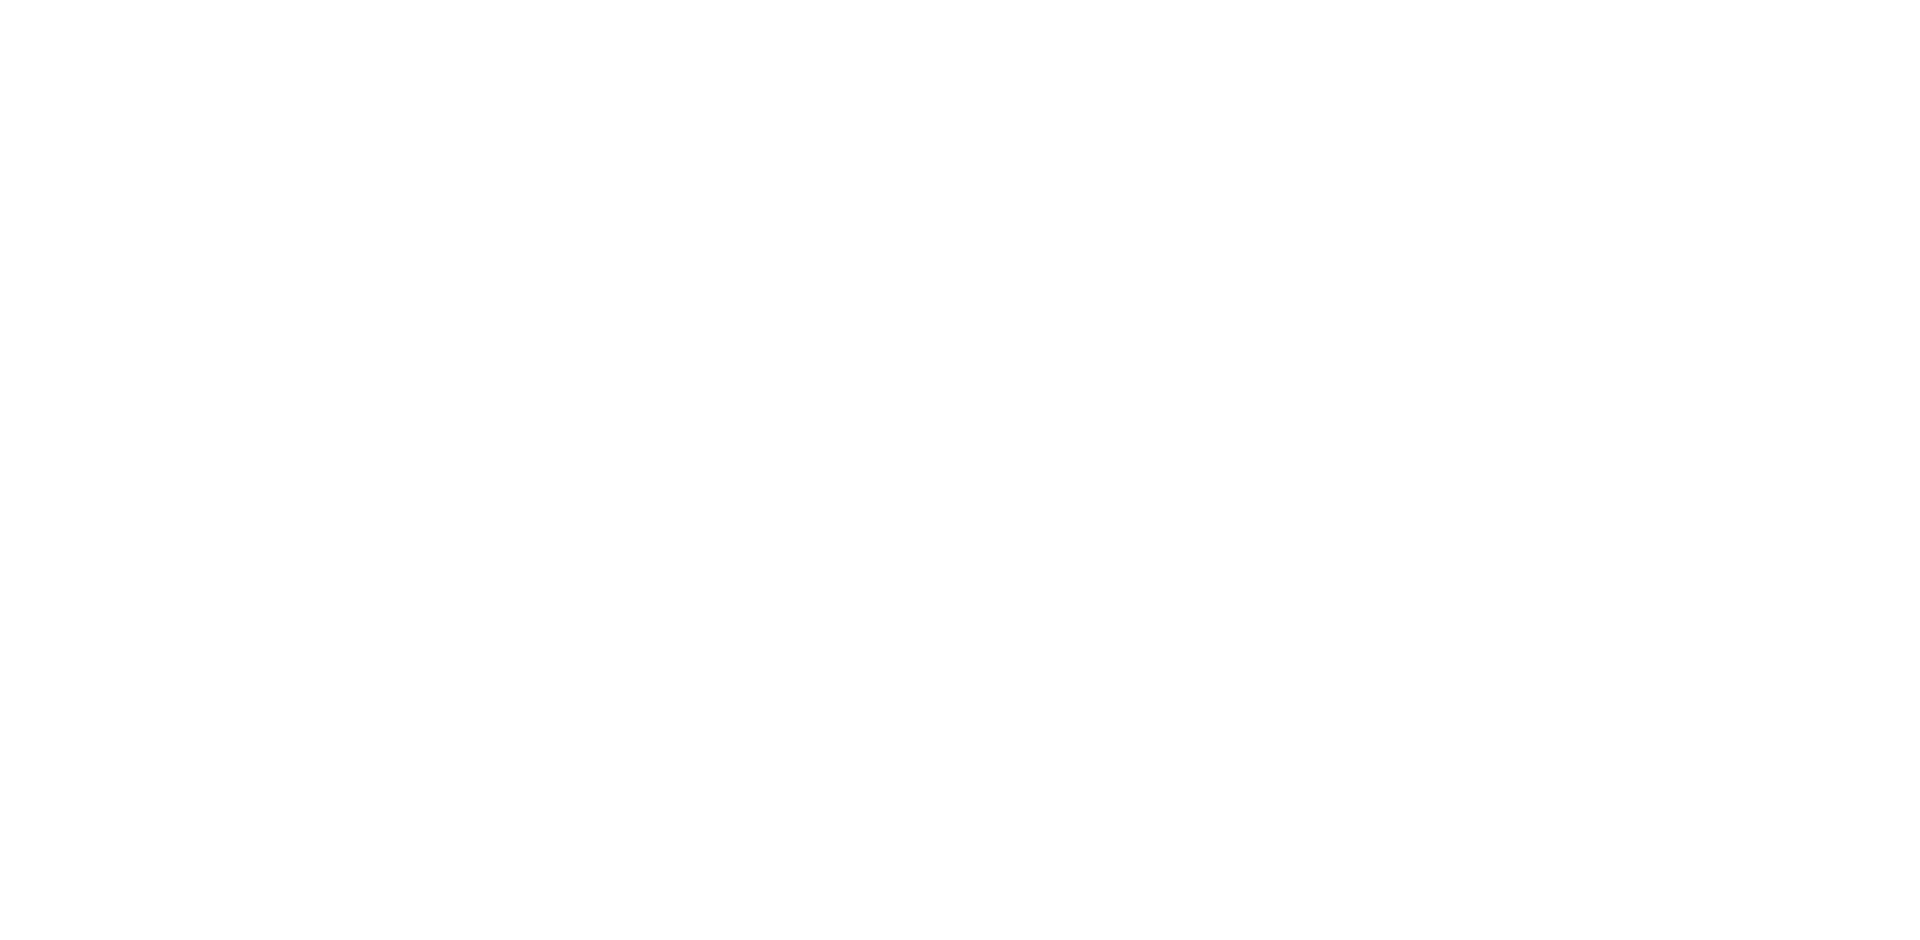 Easy&Simple online store